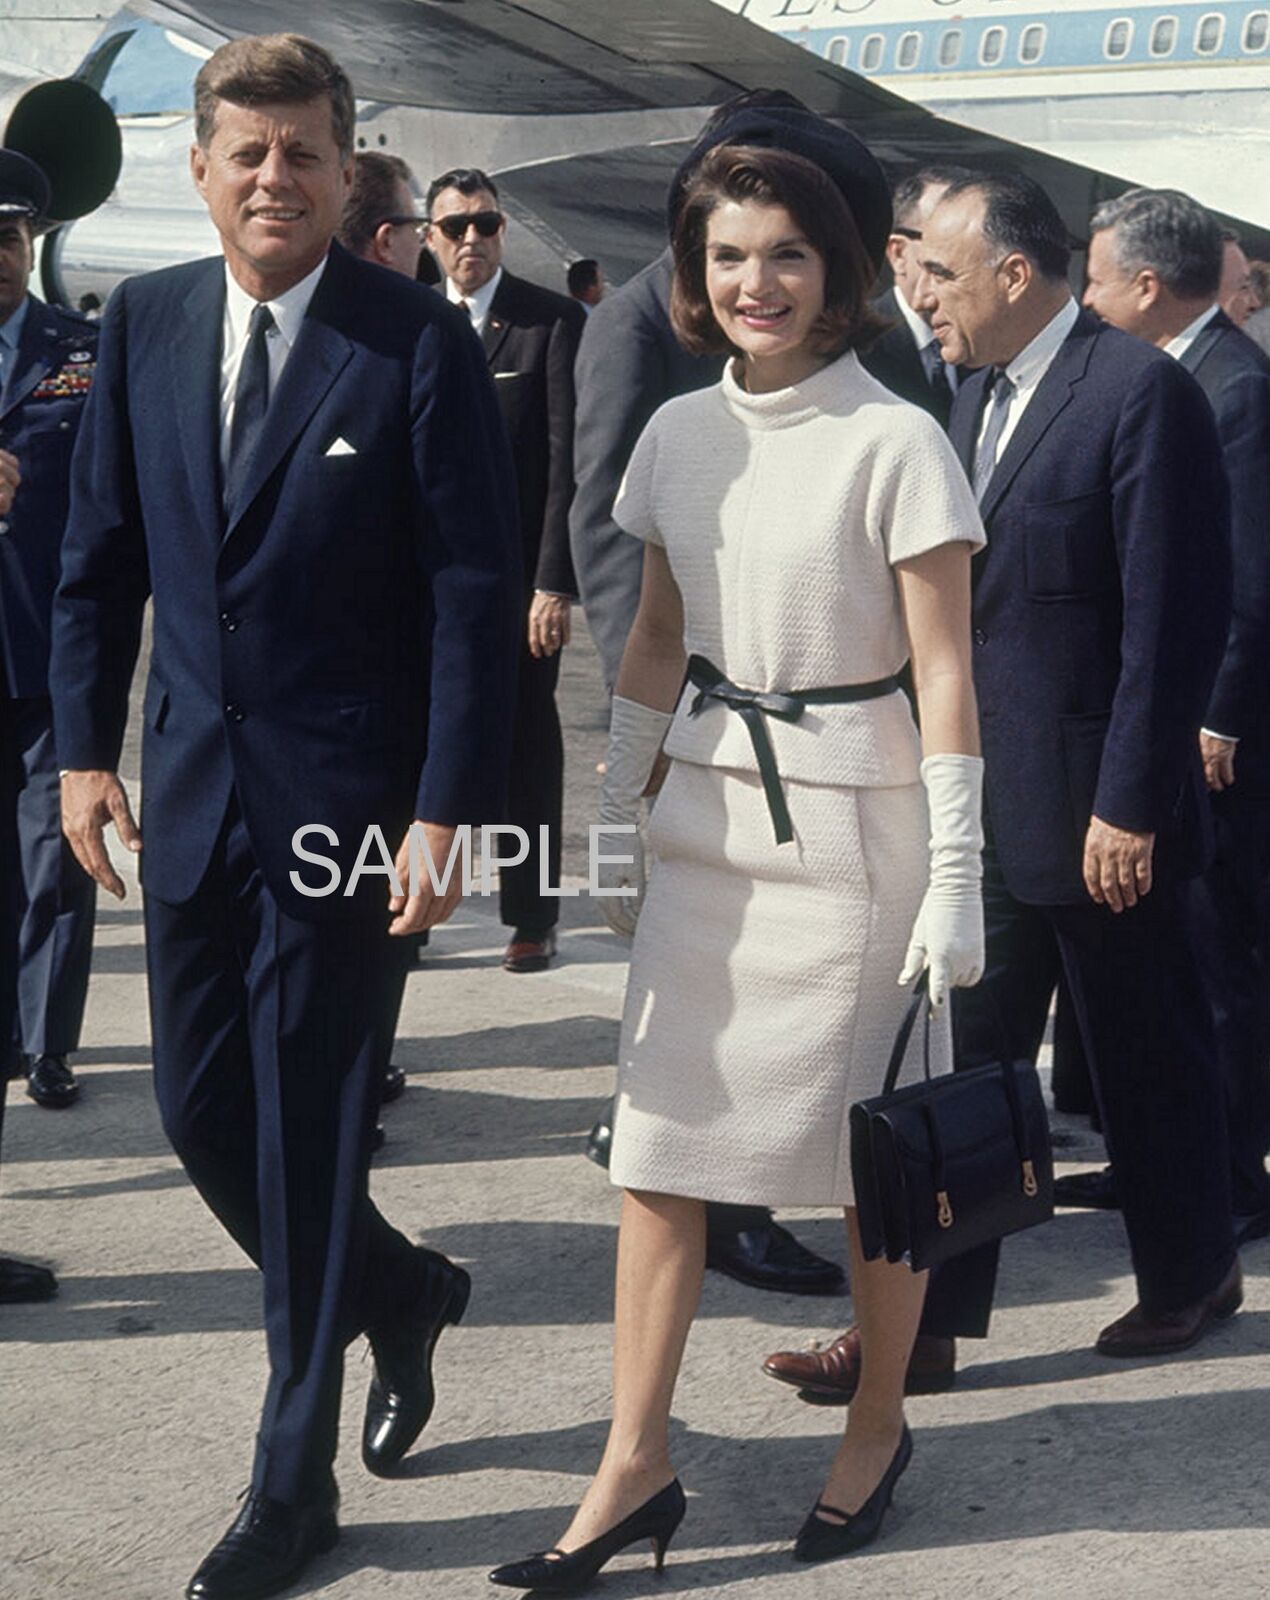 1963 PRESIDENT KENNEDY & JACKIE ARRIVE IN SAN ANTONIO, PHOTO  (162-b)